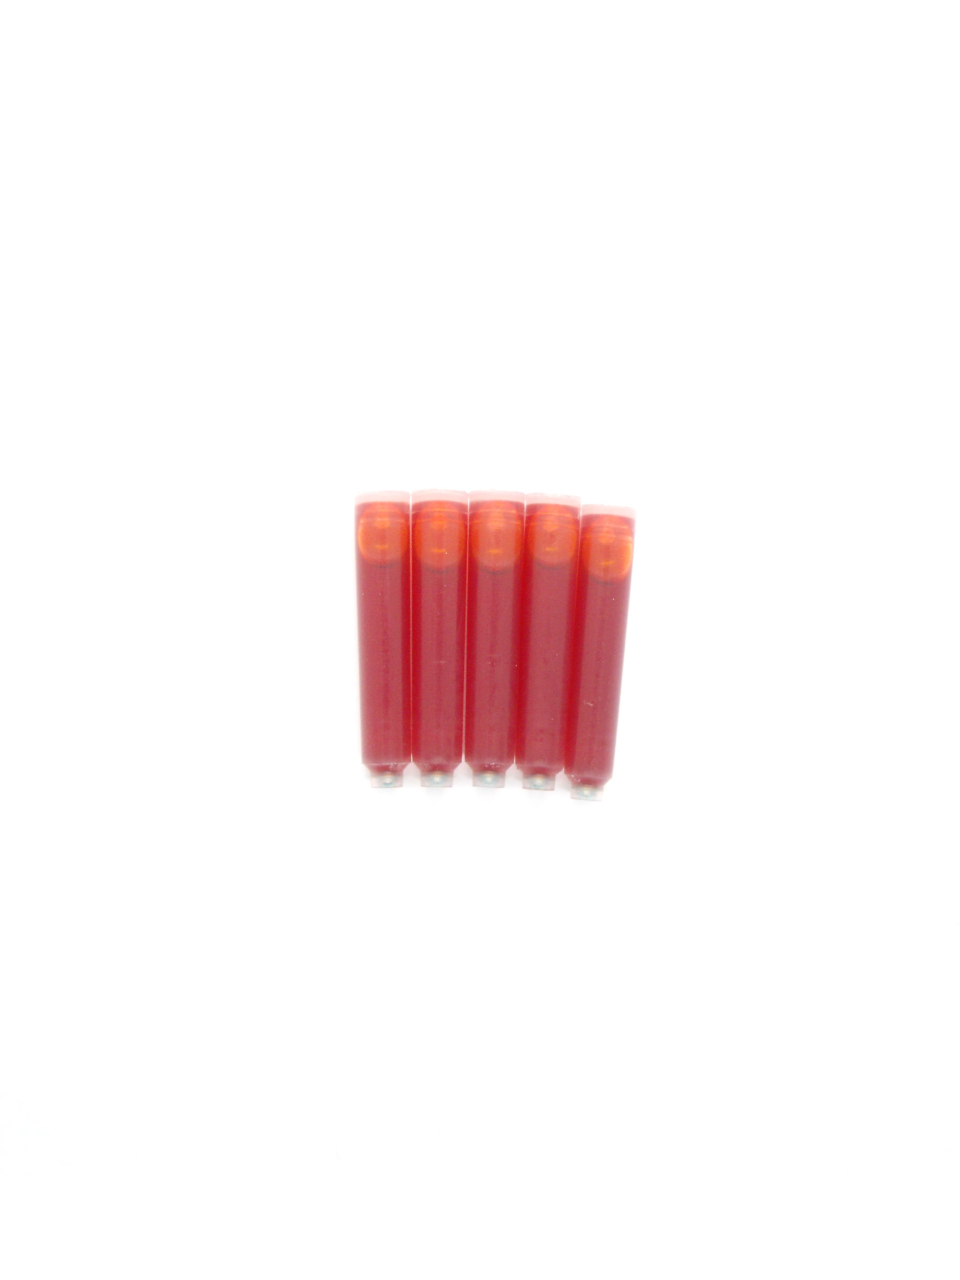 PenConverter Ink Cartridges For Filcao Fountain Pens (Orange)